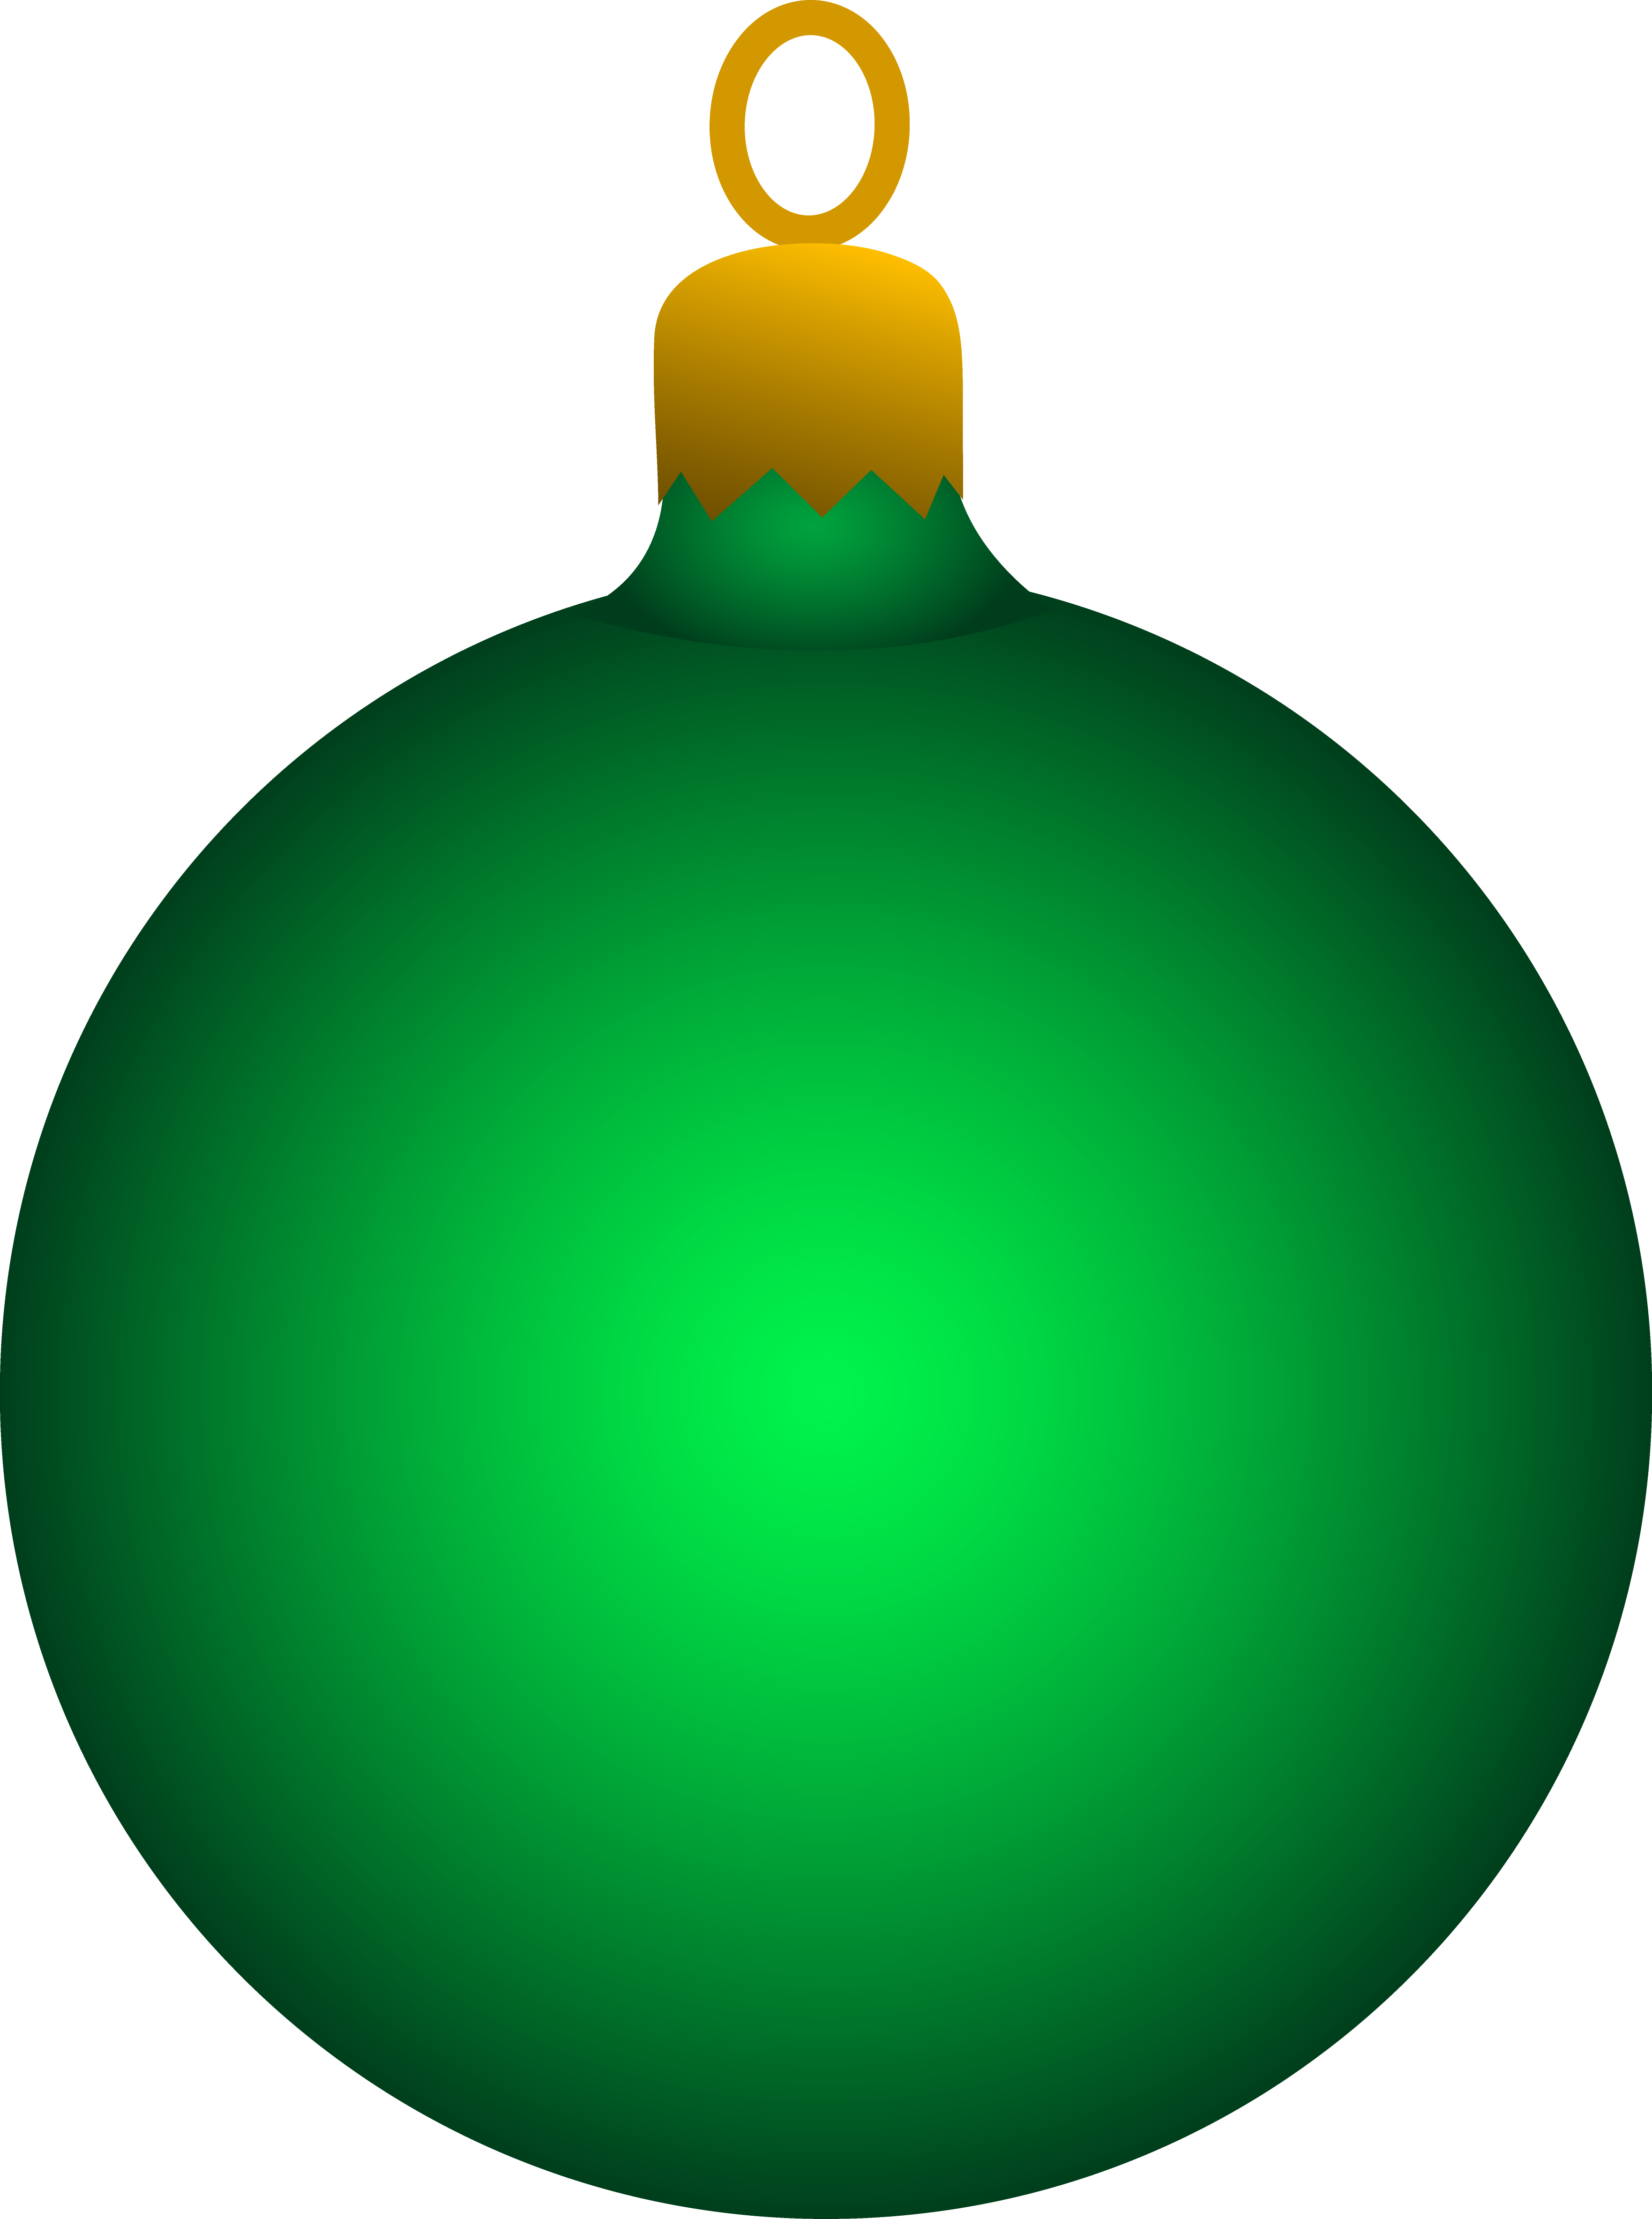 Green Christmas Tree Ornament - Free Clip Art